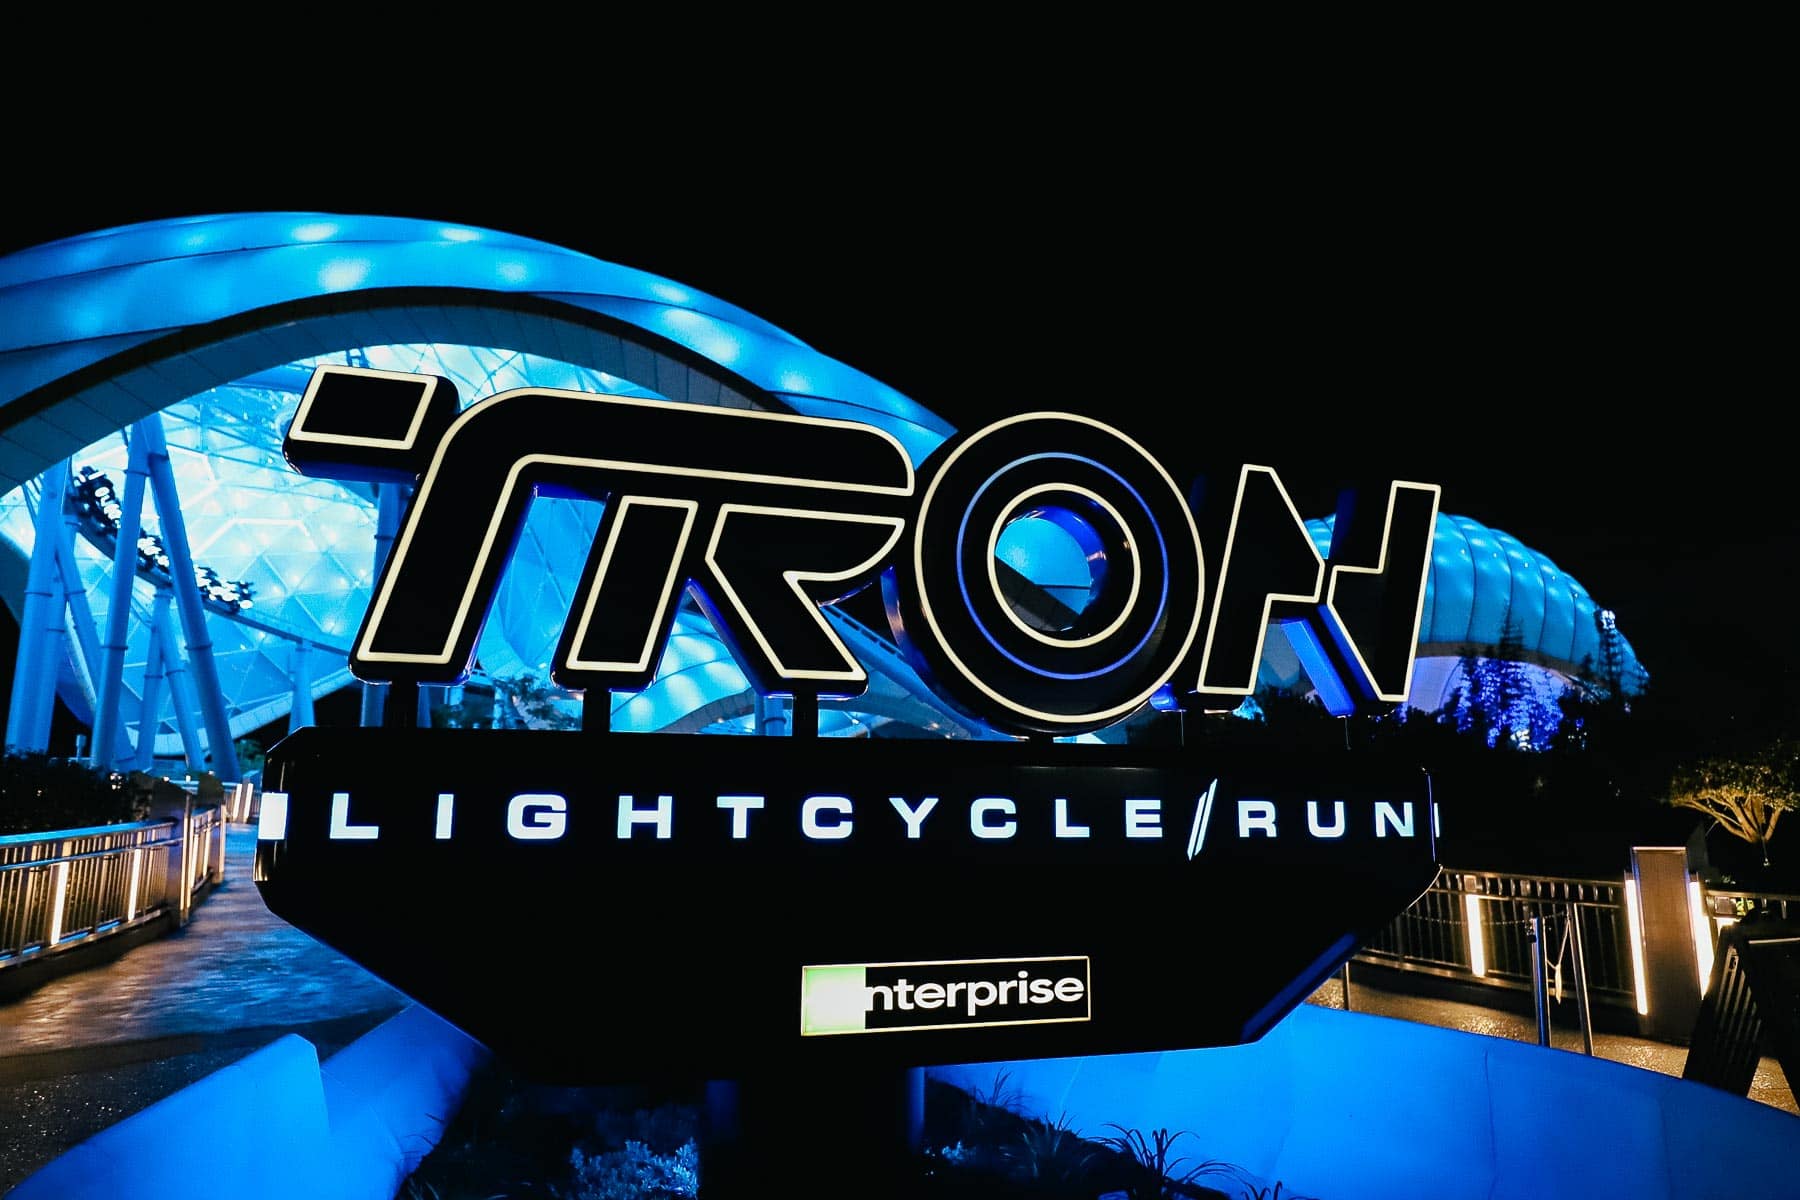 entrance sign for Tron Lightcycle Run 